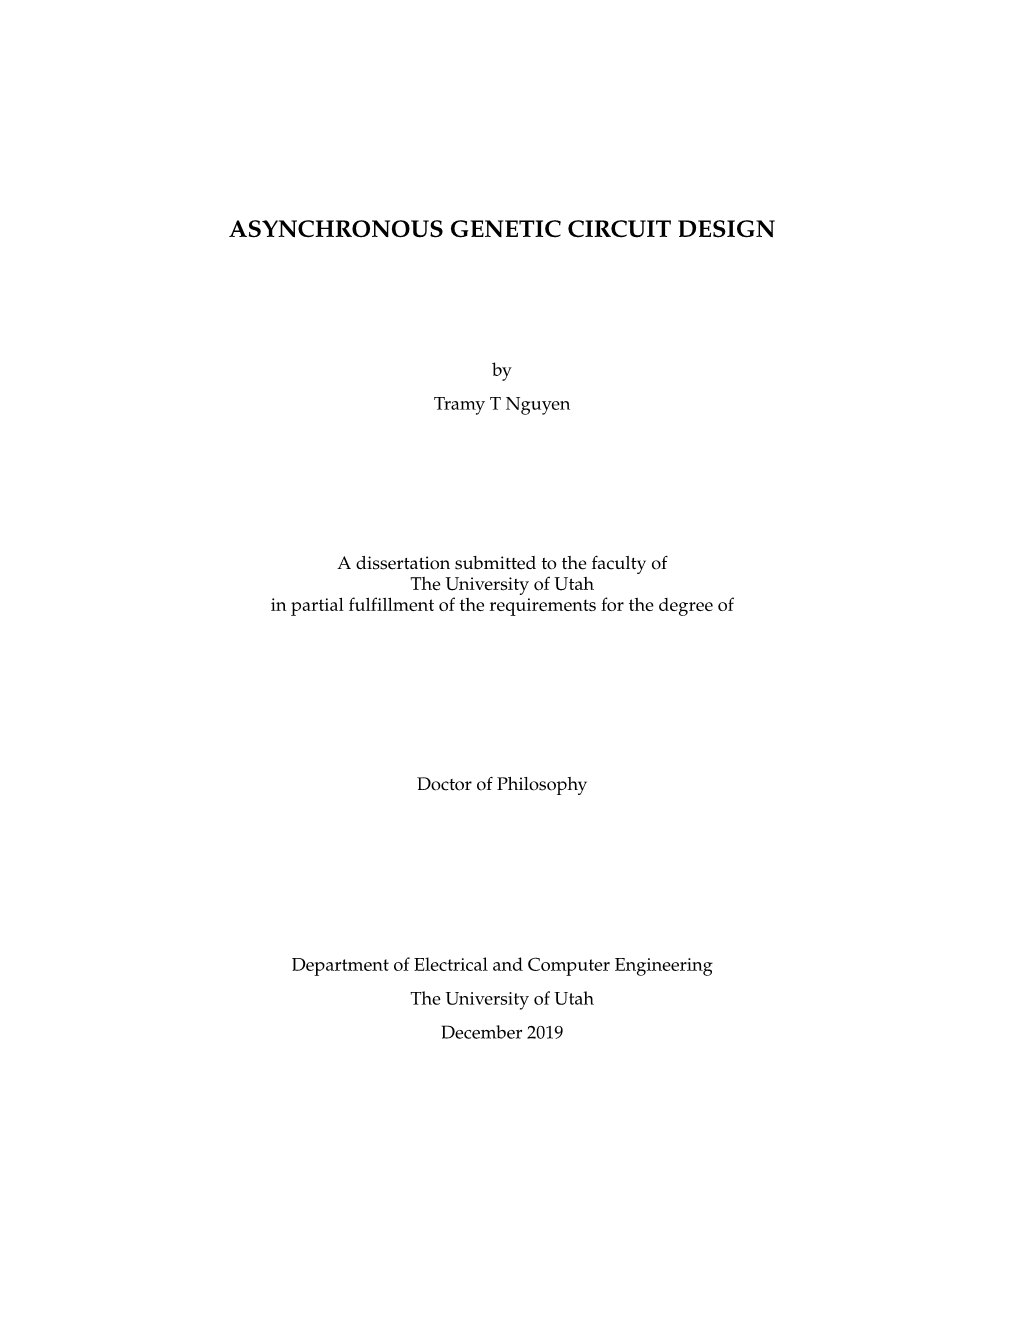 Asynchronous Genetic Circuit Design